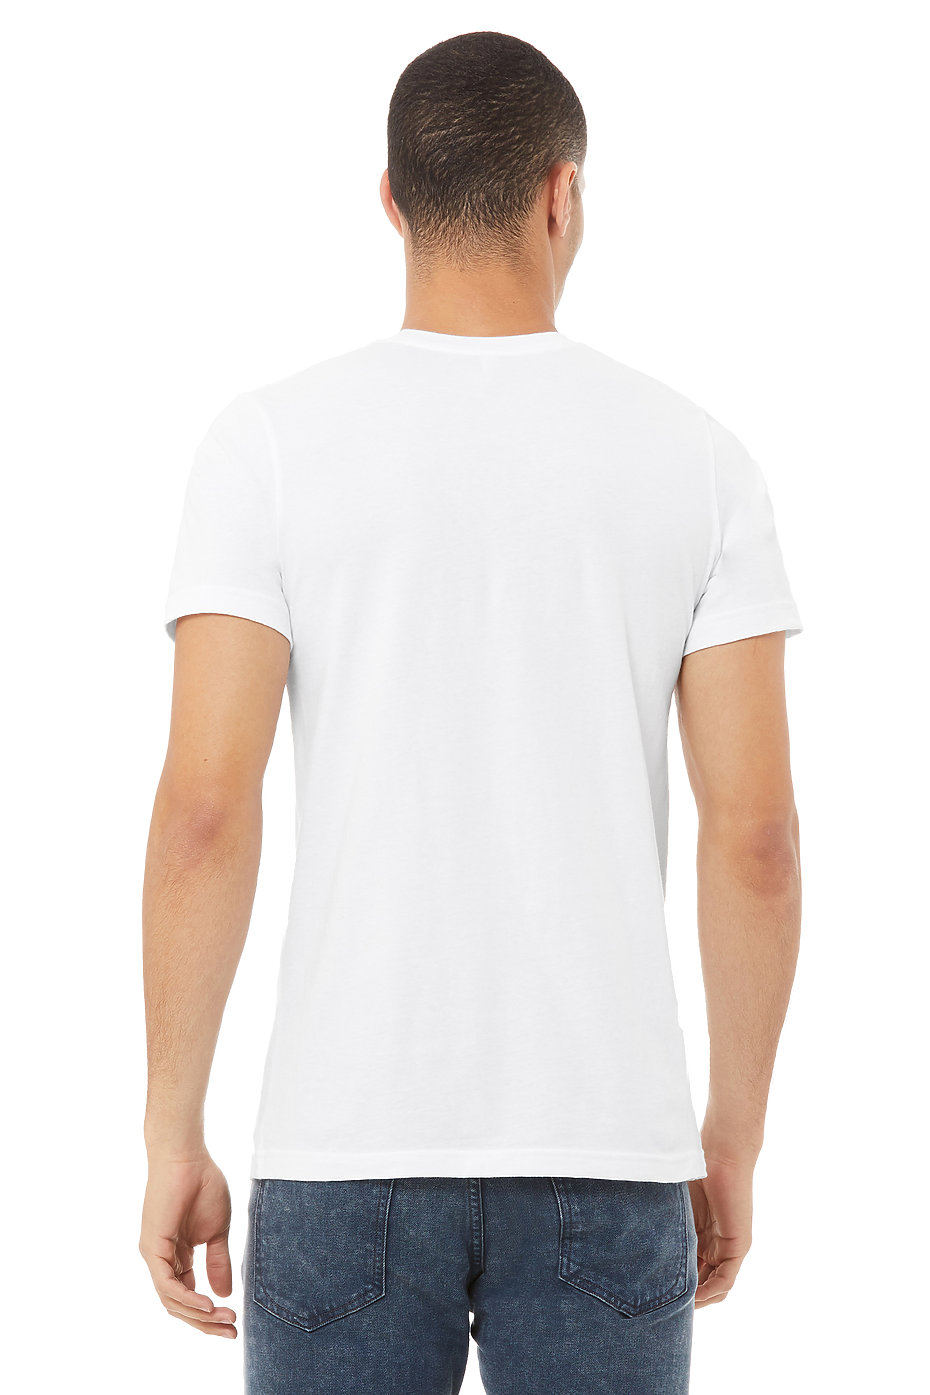 Bella + Canvas Unisex Jersey Short-Sleeve T-Shirt - SOFT PINK - XL - (Style  # 3001C - Original Label)